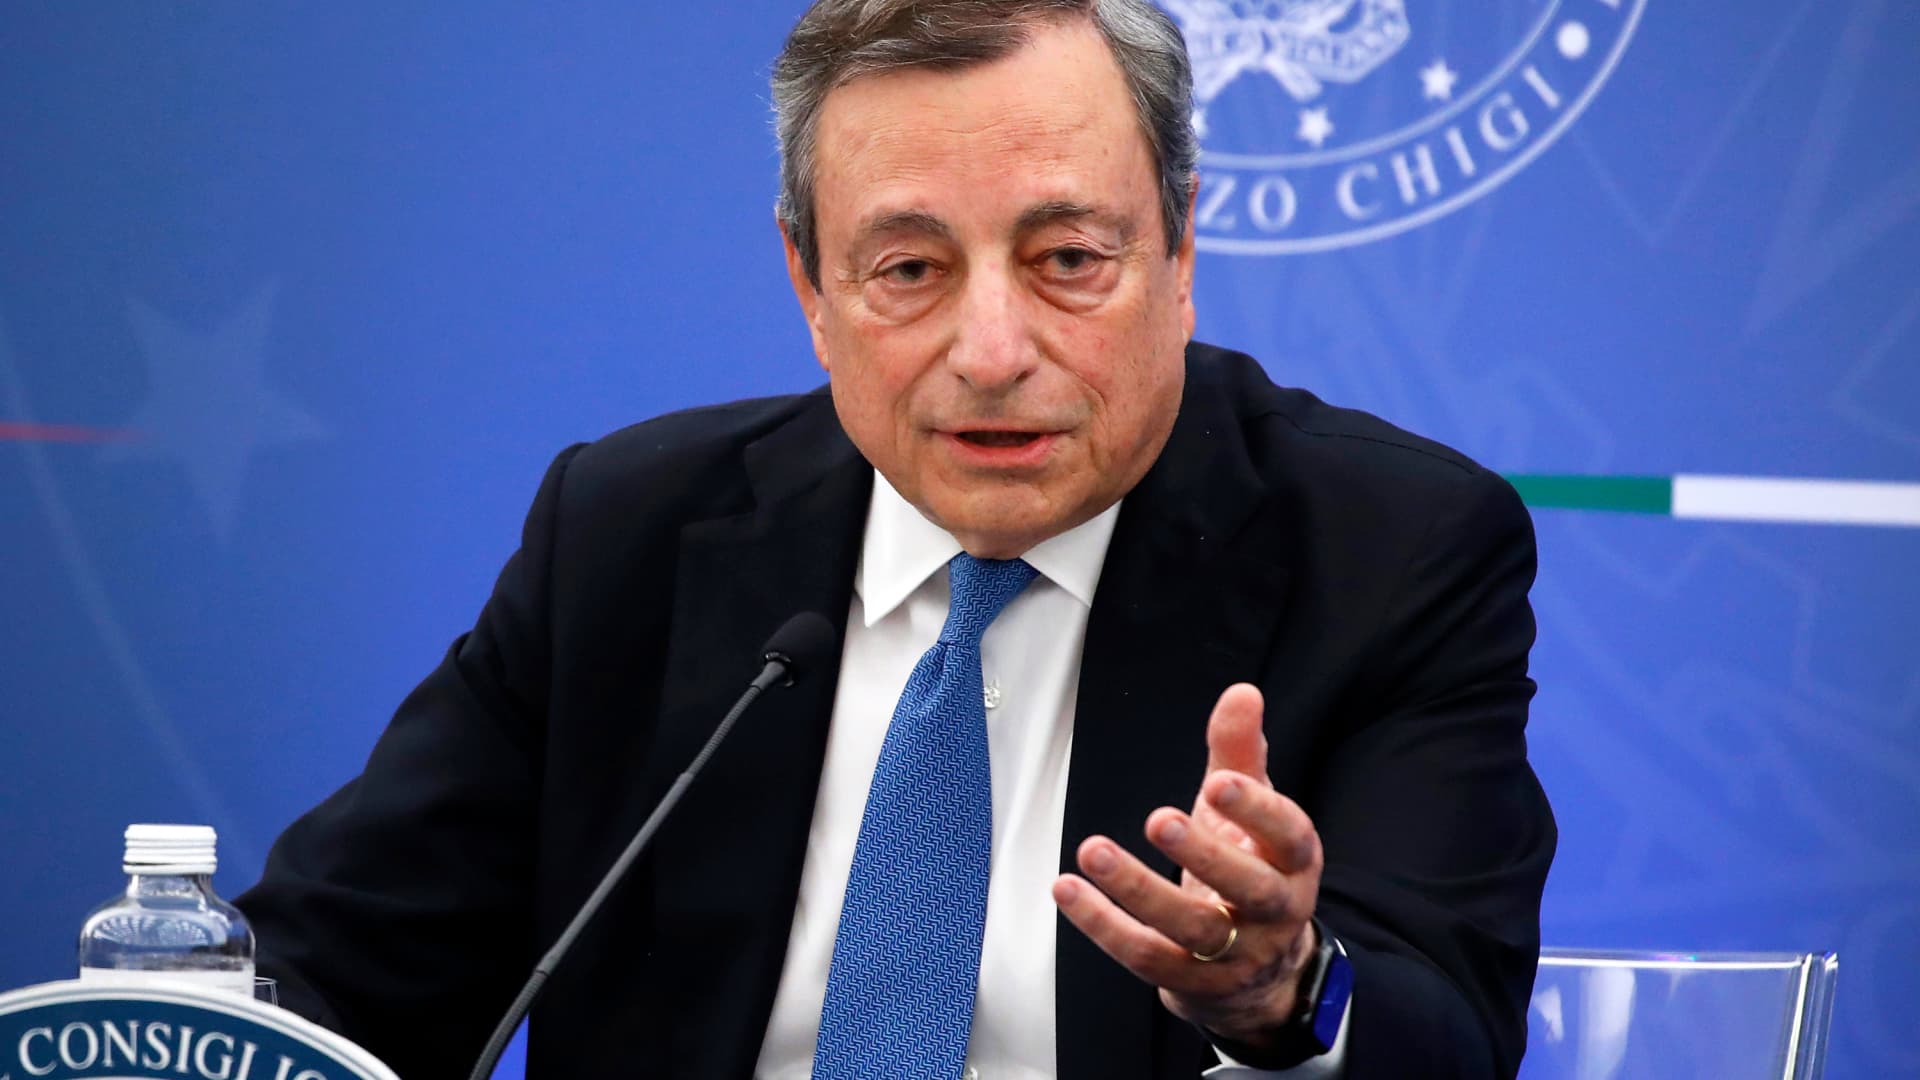 Italian PM Draghi’s fate hangs in balance as unity call falls flat